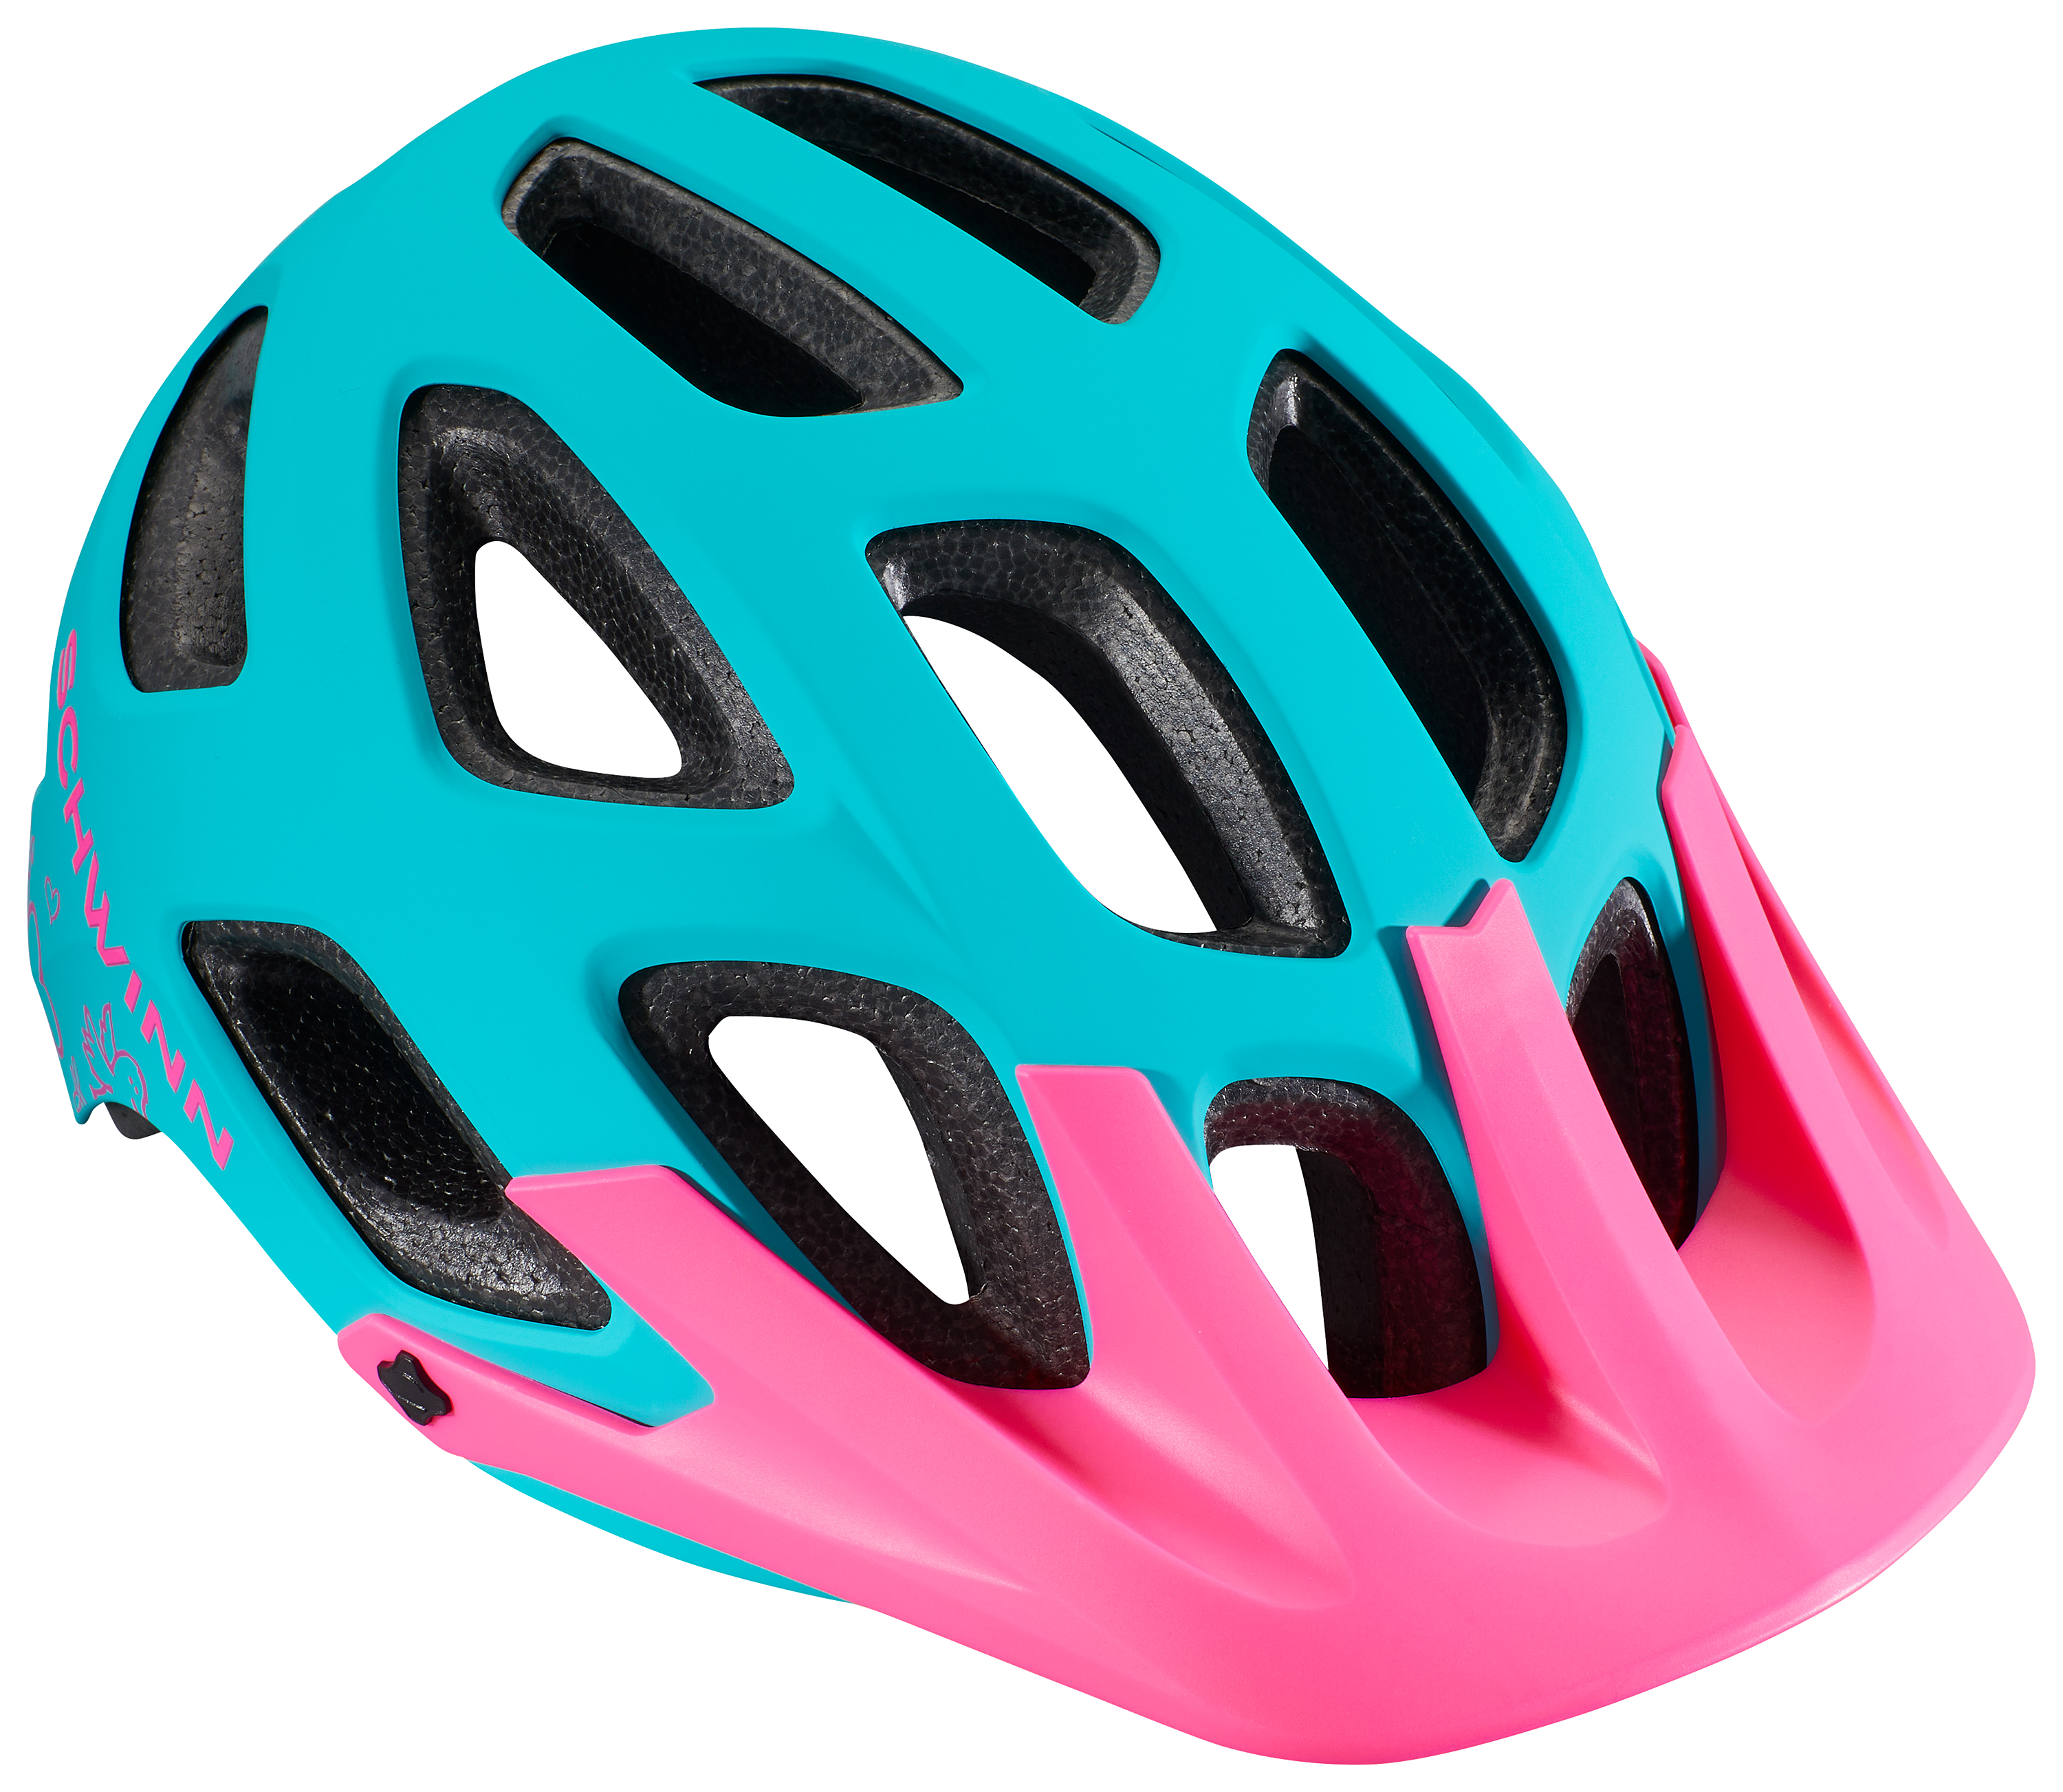 Schwinn Excursion Bike Helmet for Kids - Pink/Teal - Age 5-8